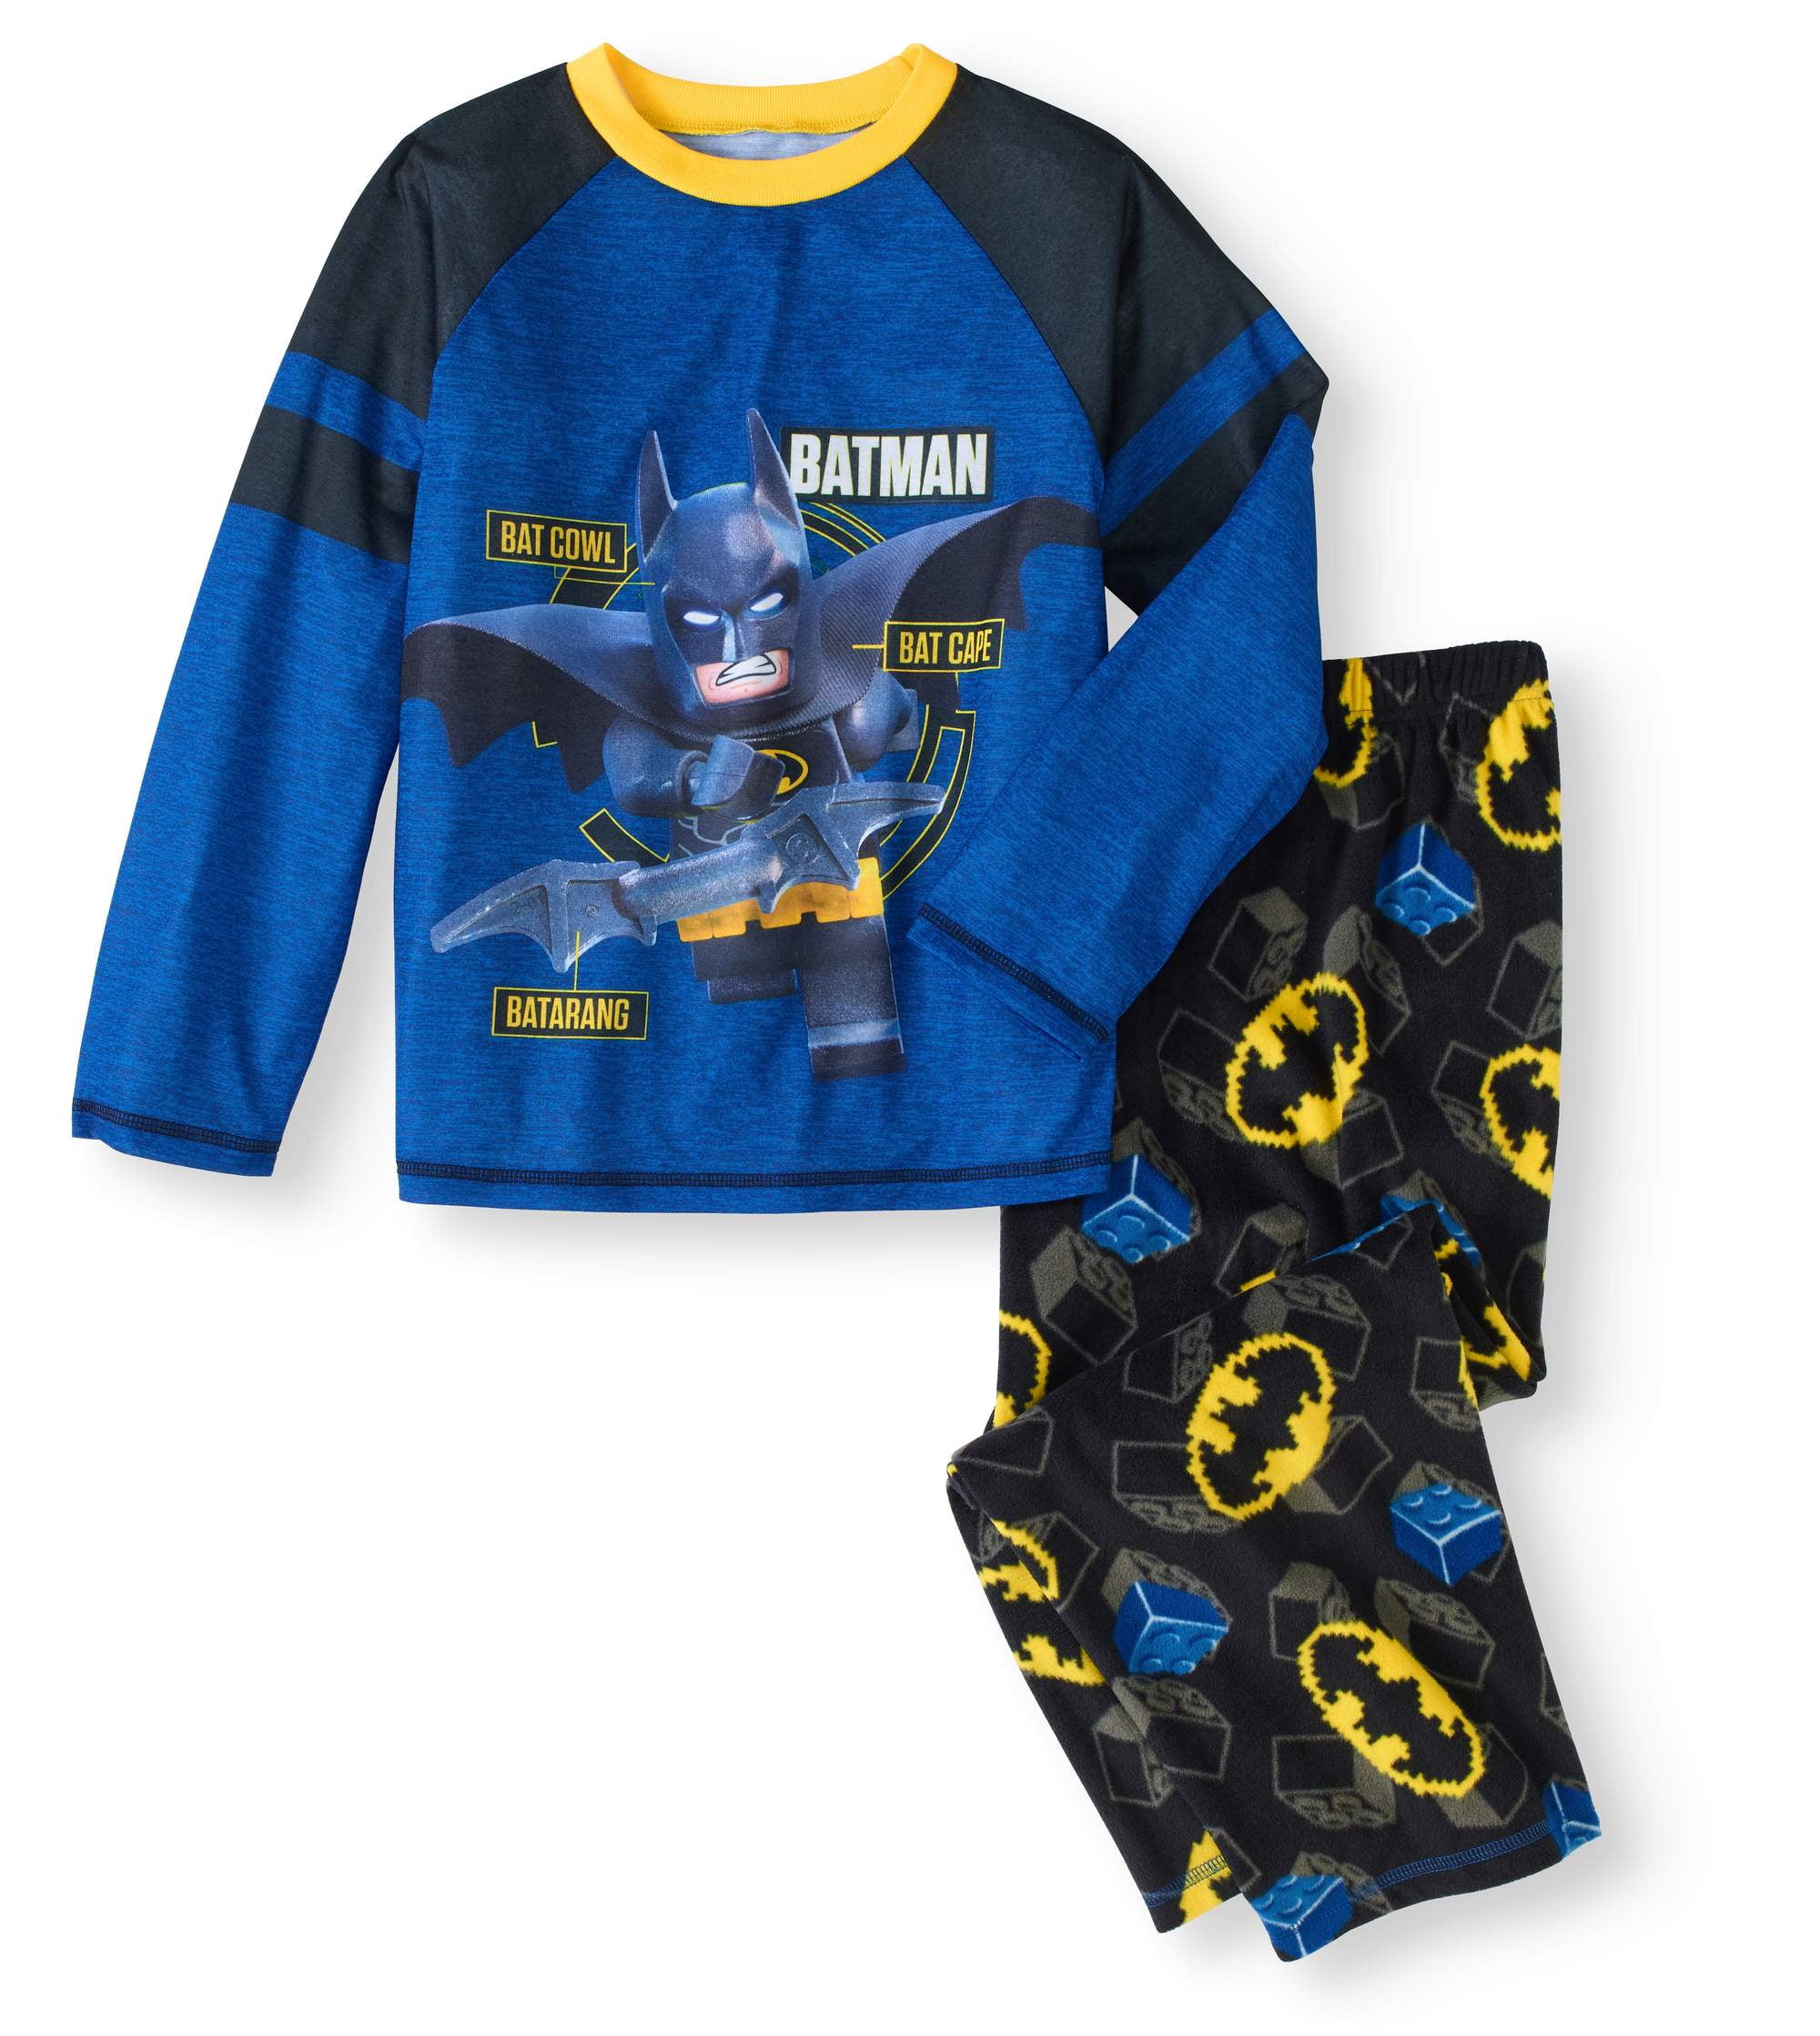 Gap Baby Boy Toddler DC Batman PJ Sleep Set Pajamas Navy Blue Gold Size 3T NWT 